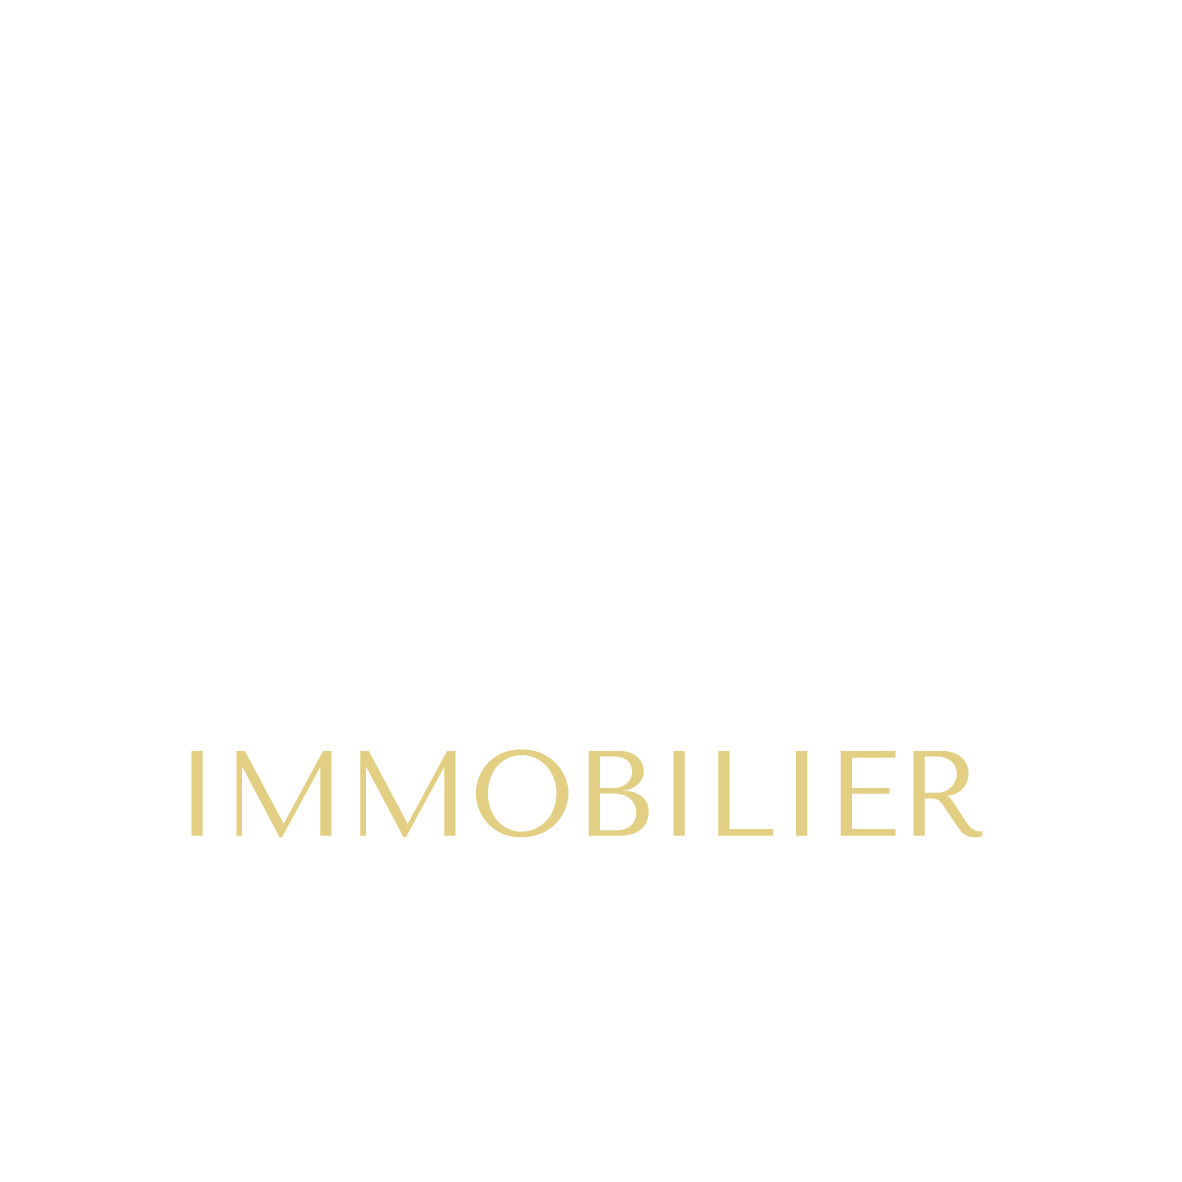 Attena Immobilier logo 9